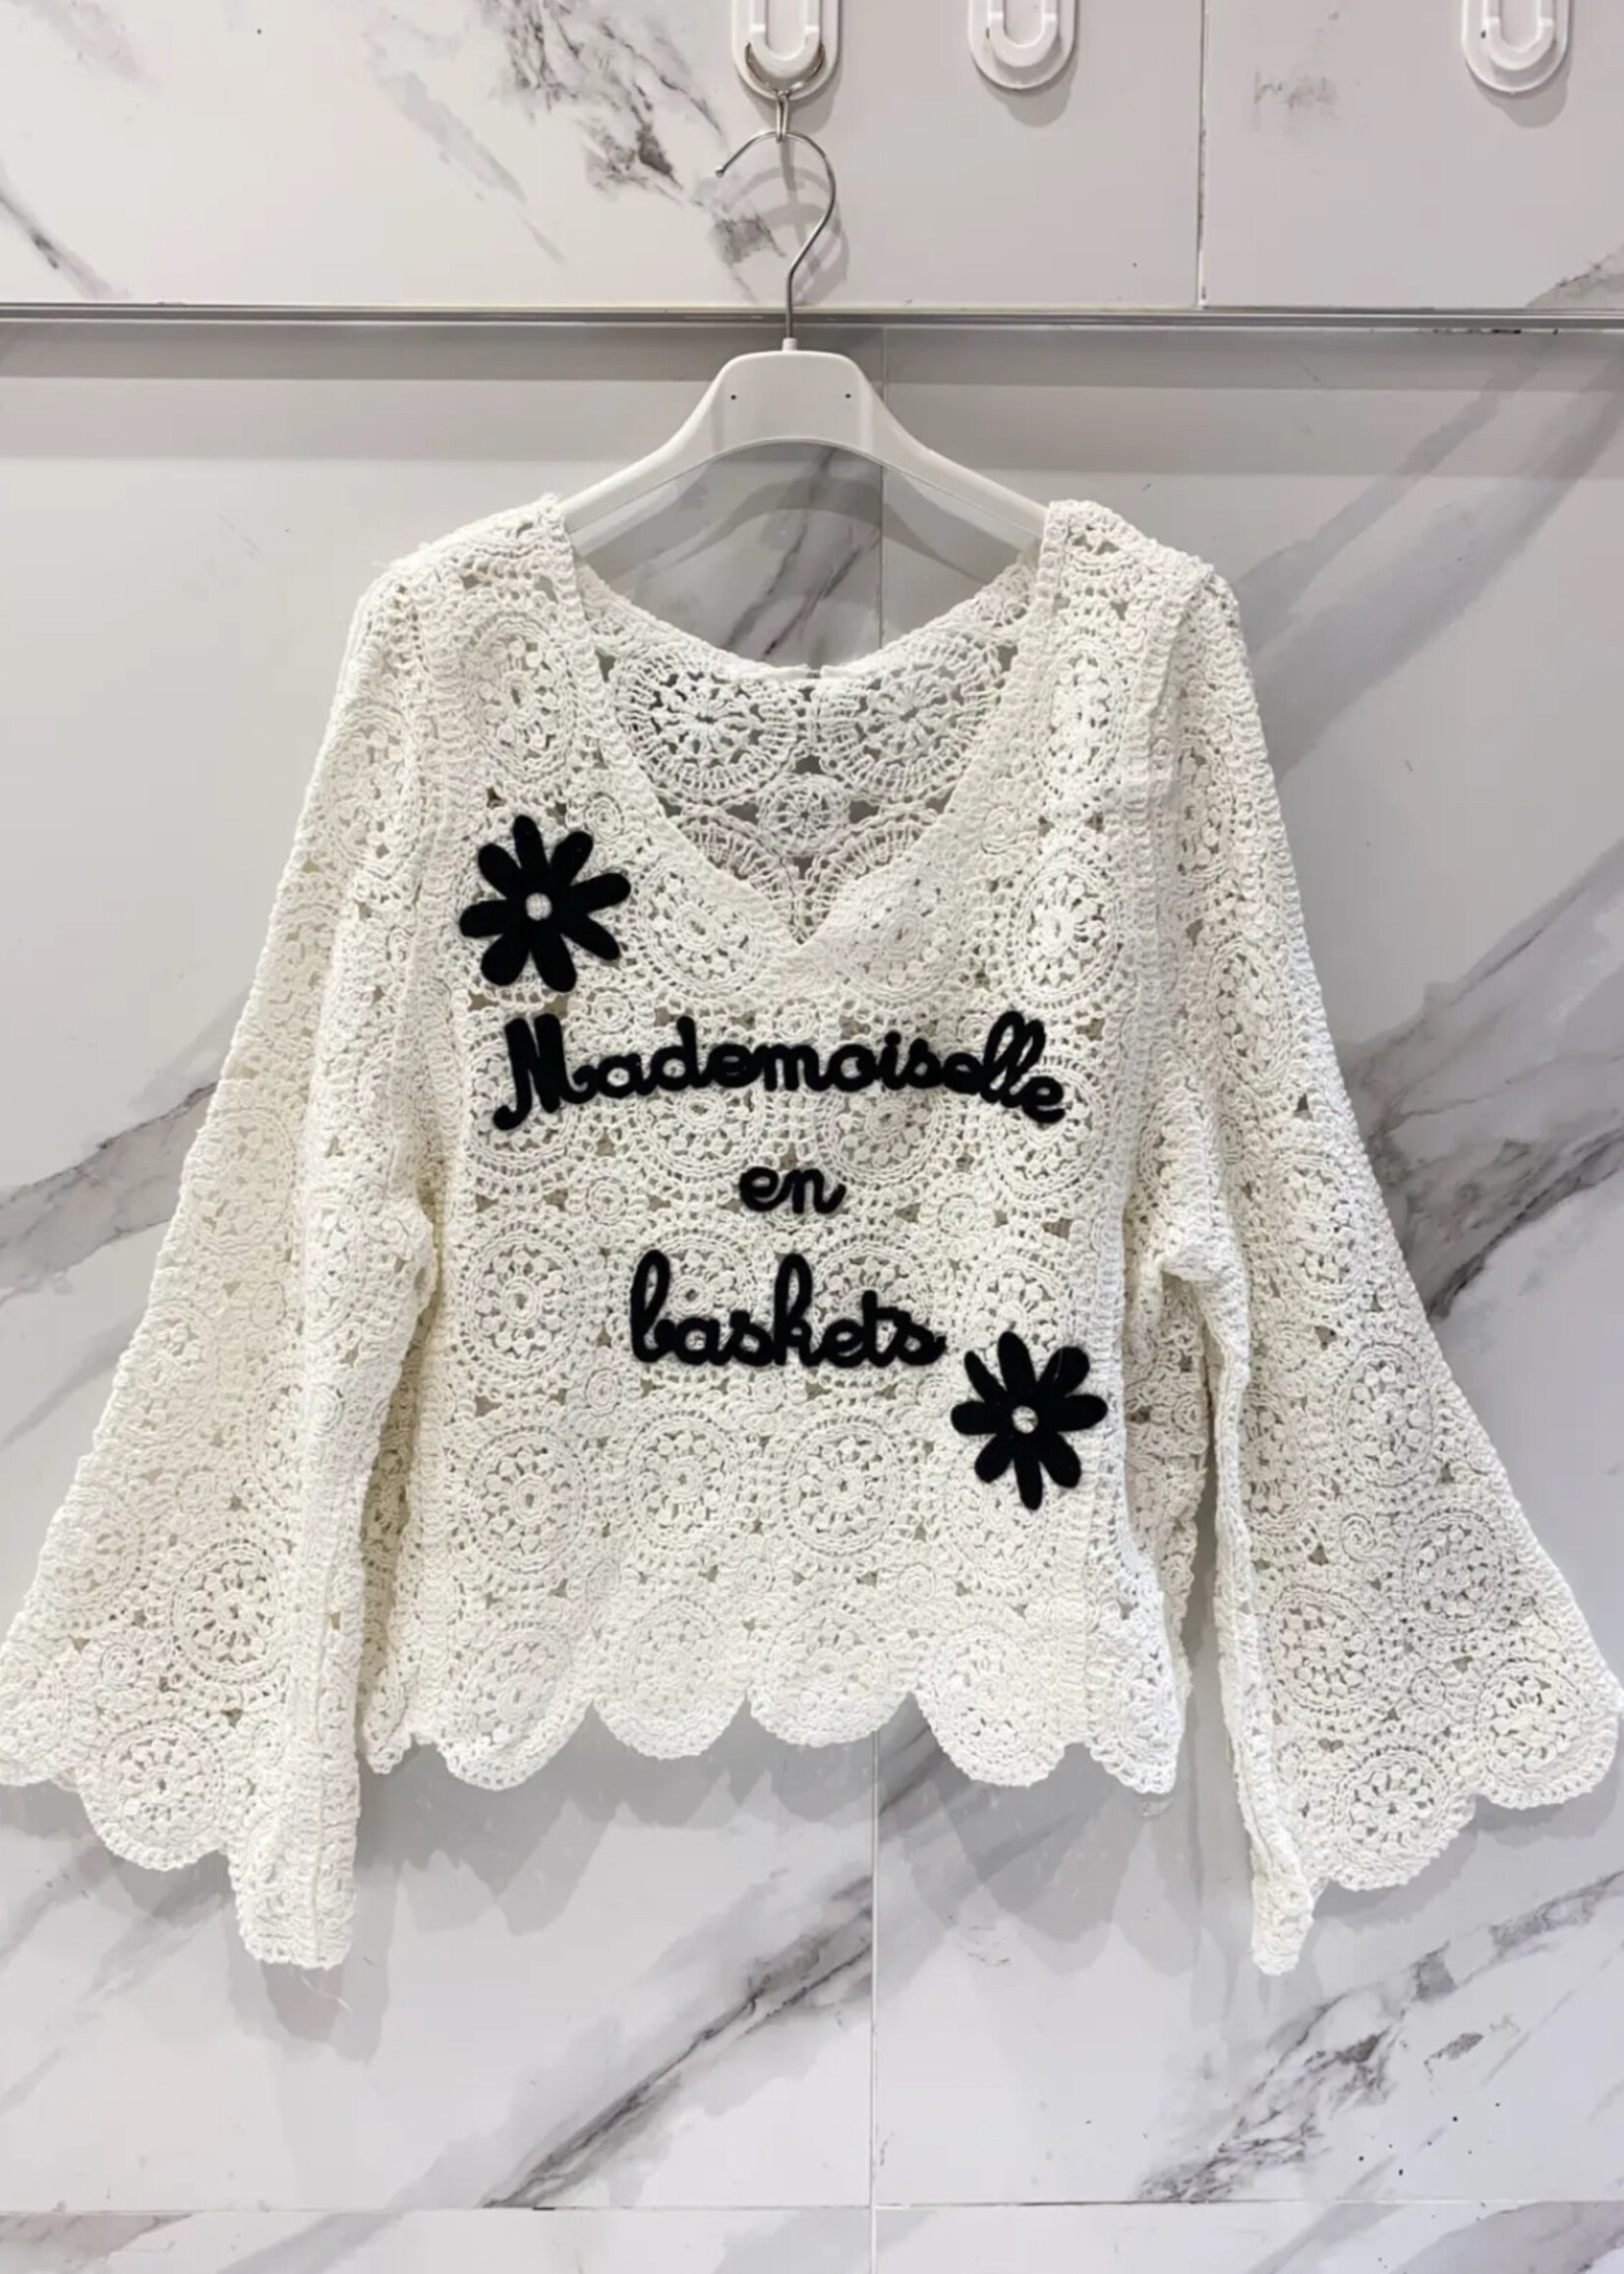 Mademoiselle sweater